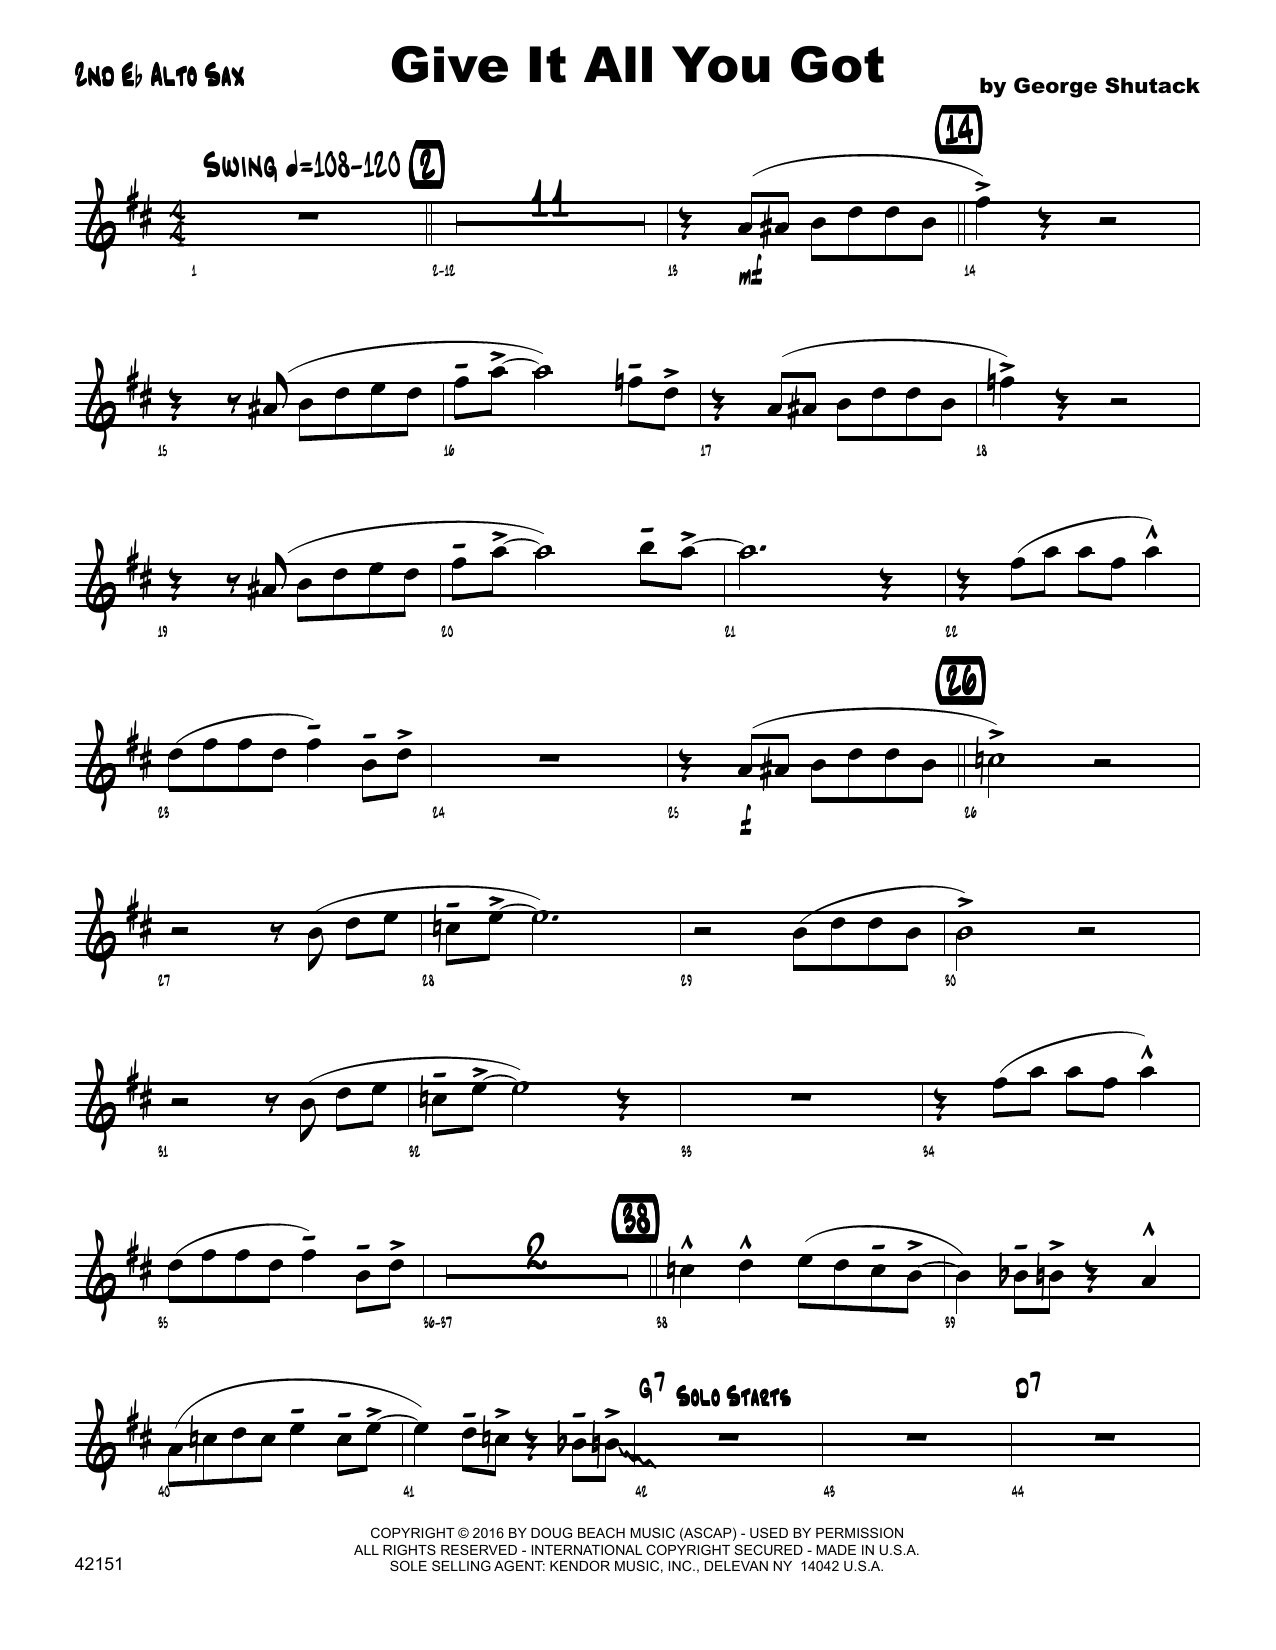 Download George Shutack Give It All You Got - 2nd Eb Alto Saxop Sheet Music